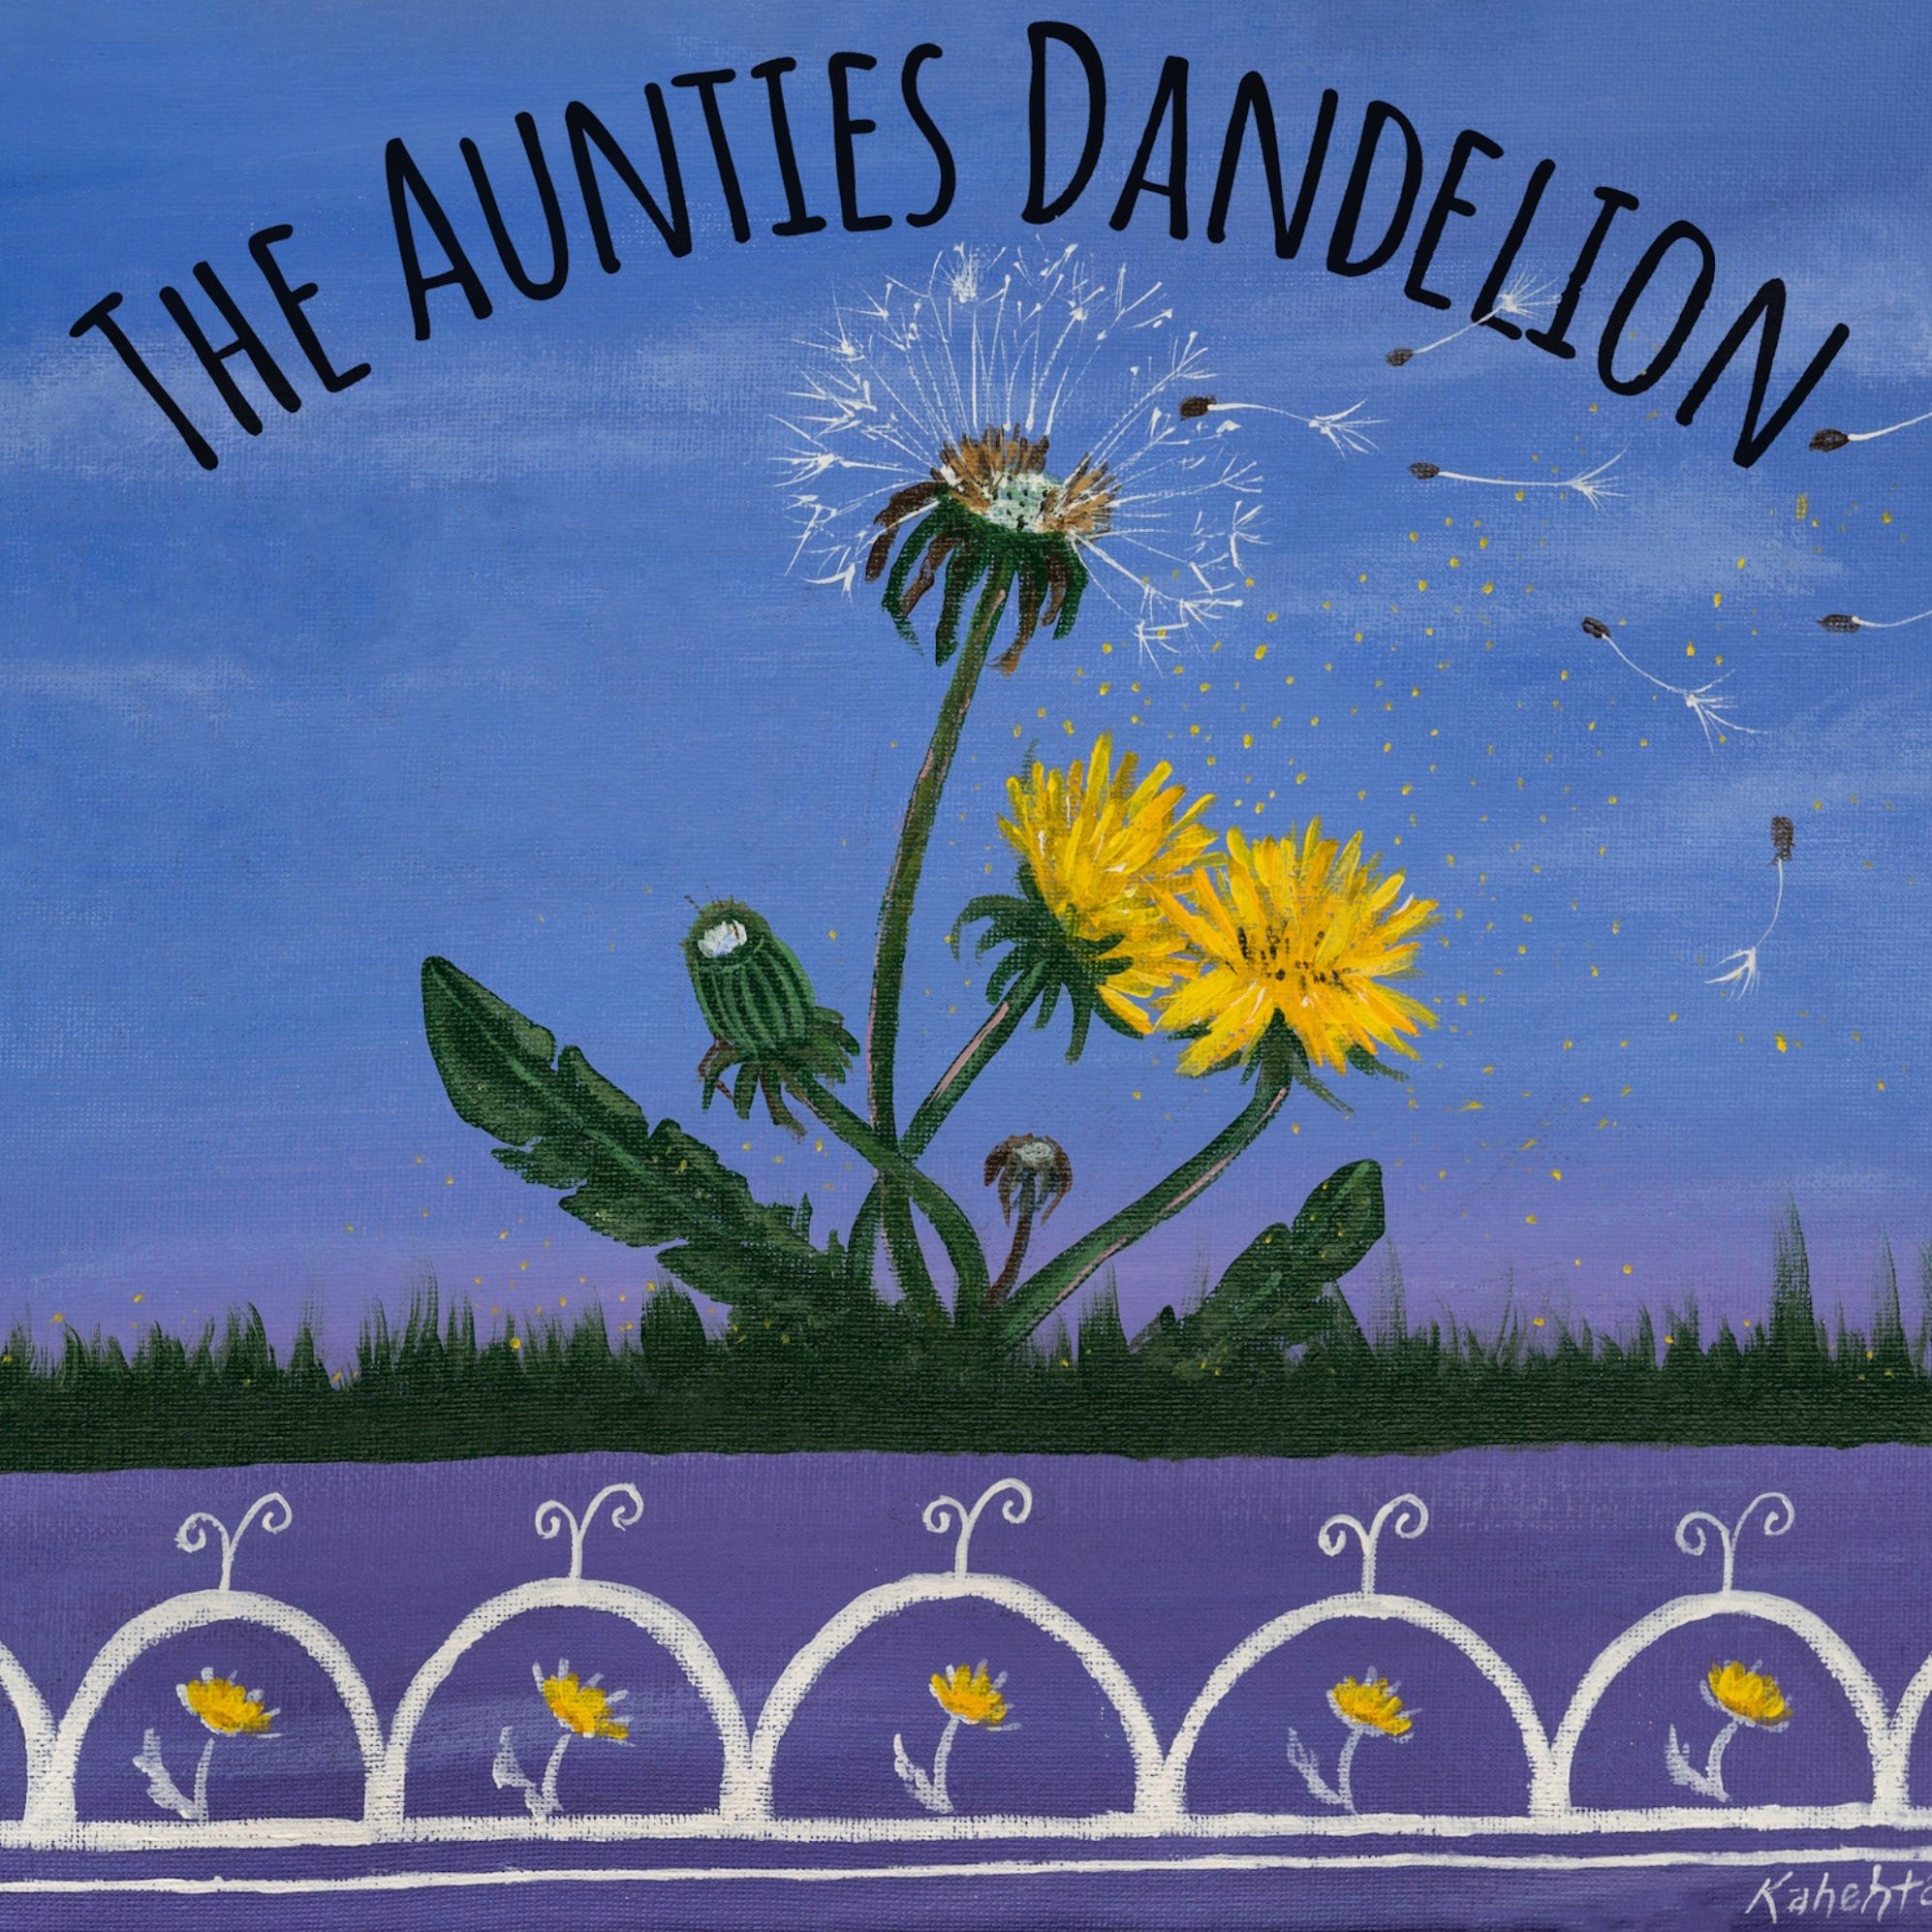 The Aunties Dandelion